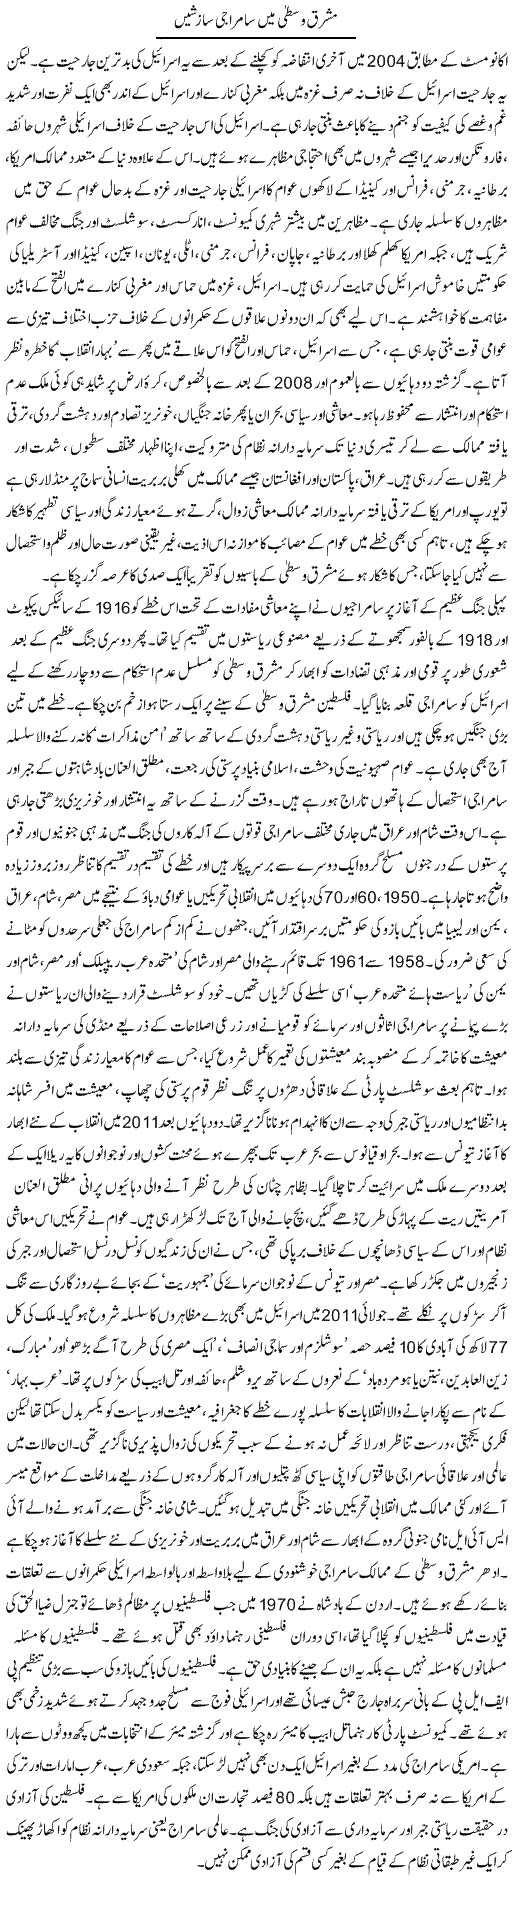 Mashriq Wusta Main Saamraji Sazishain | Zubair Rehman | Daily Urdu Columns